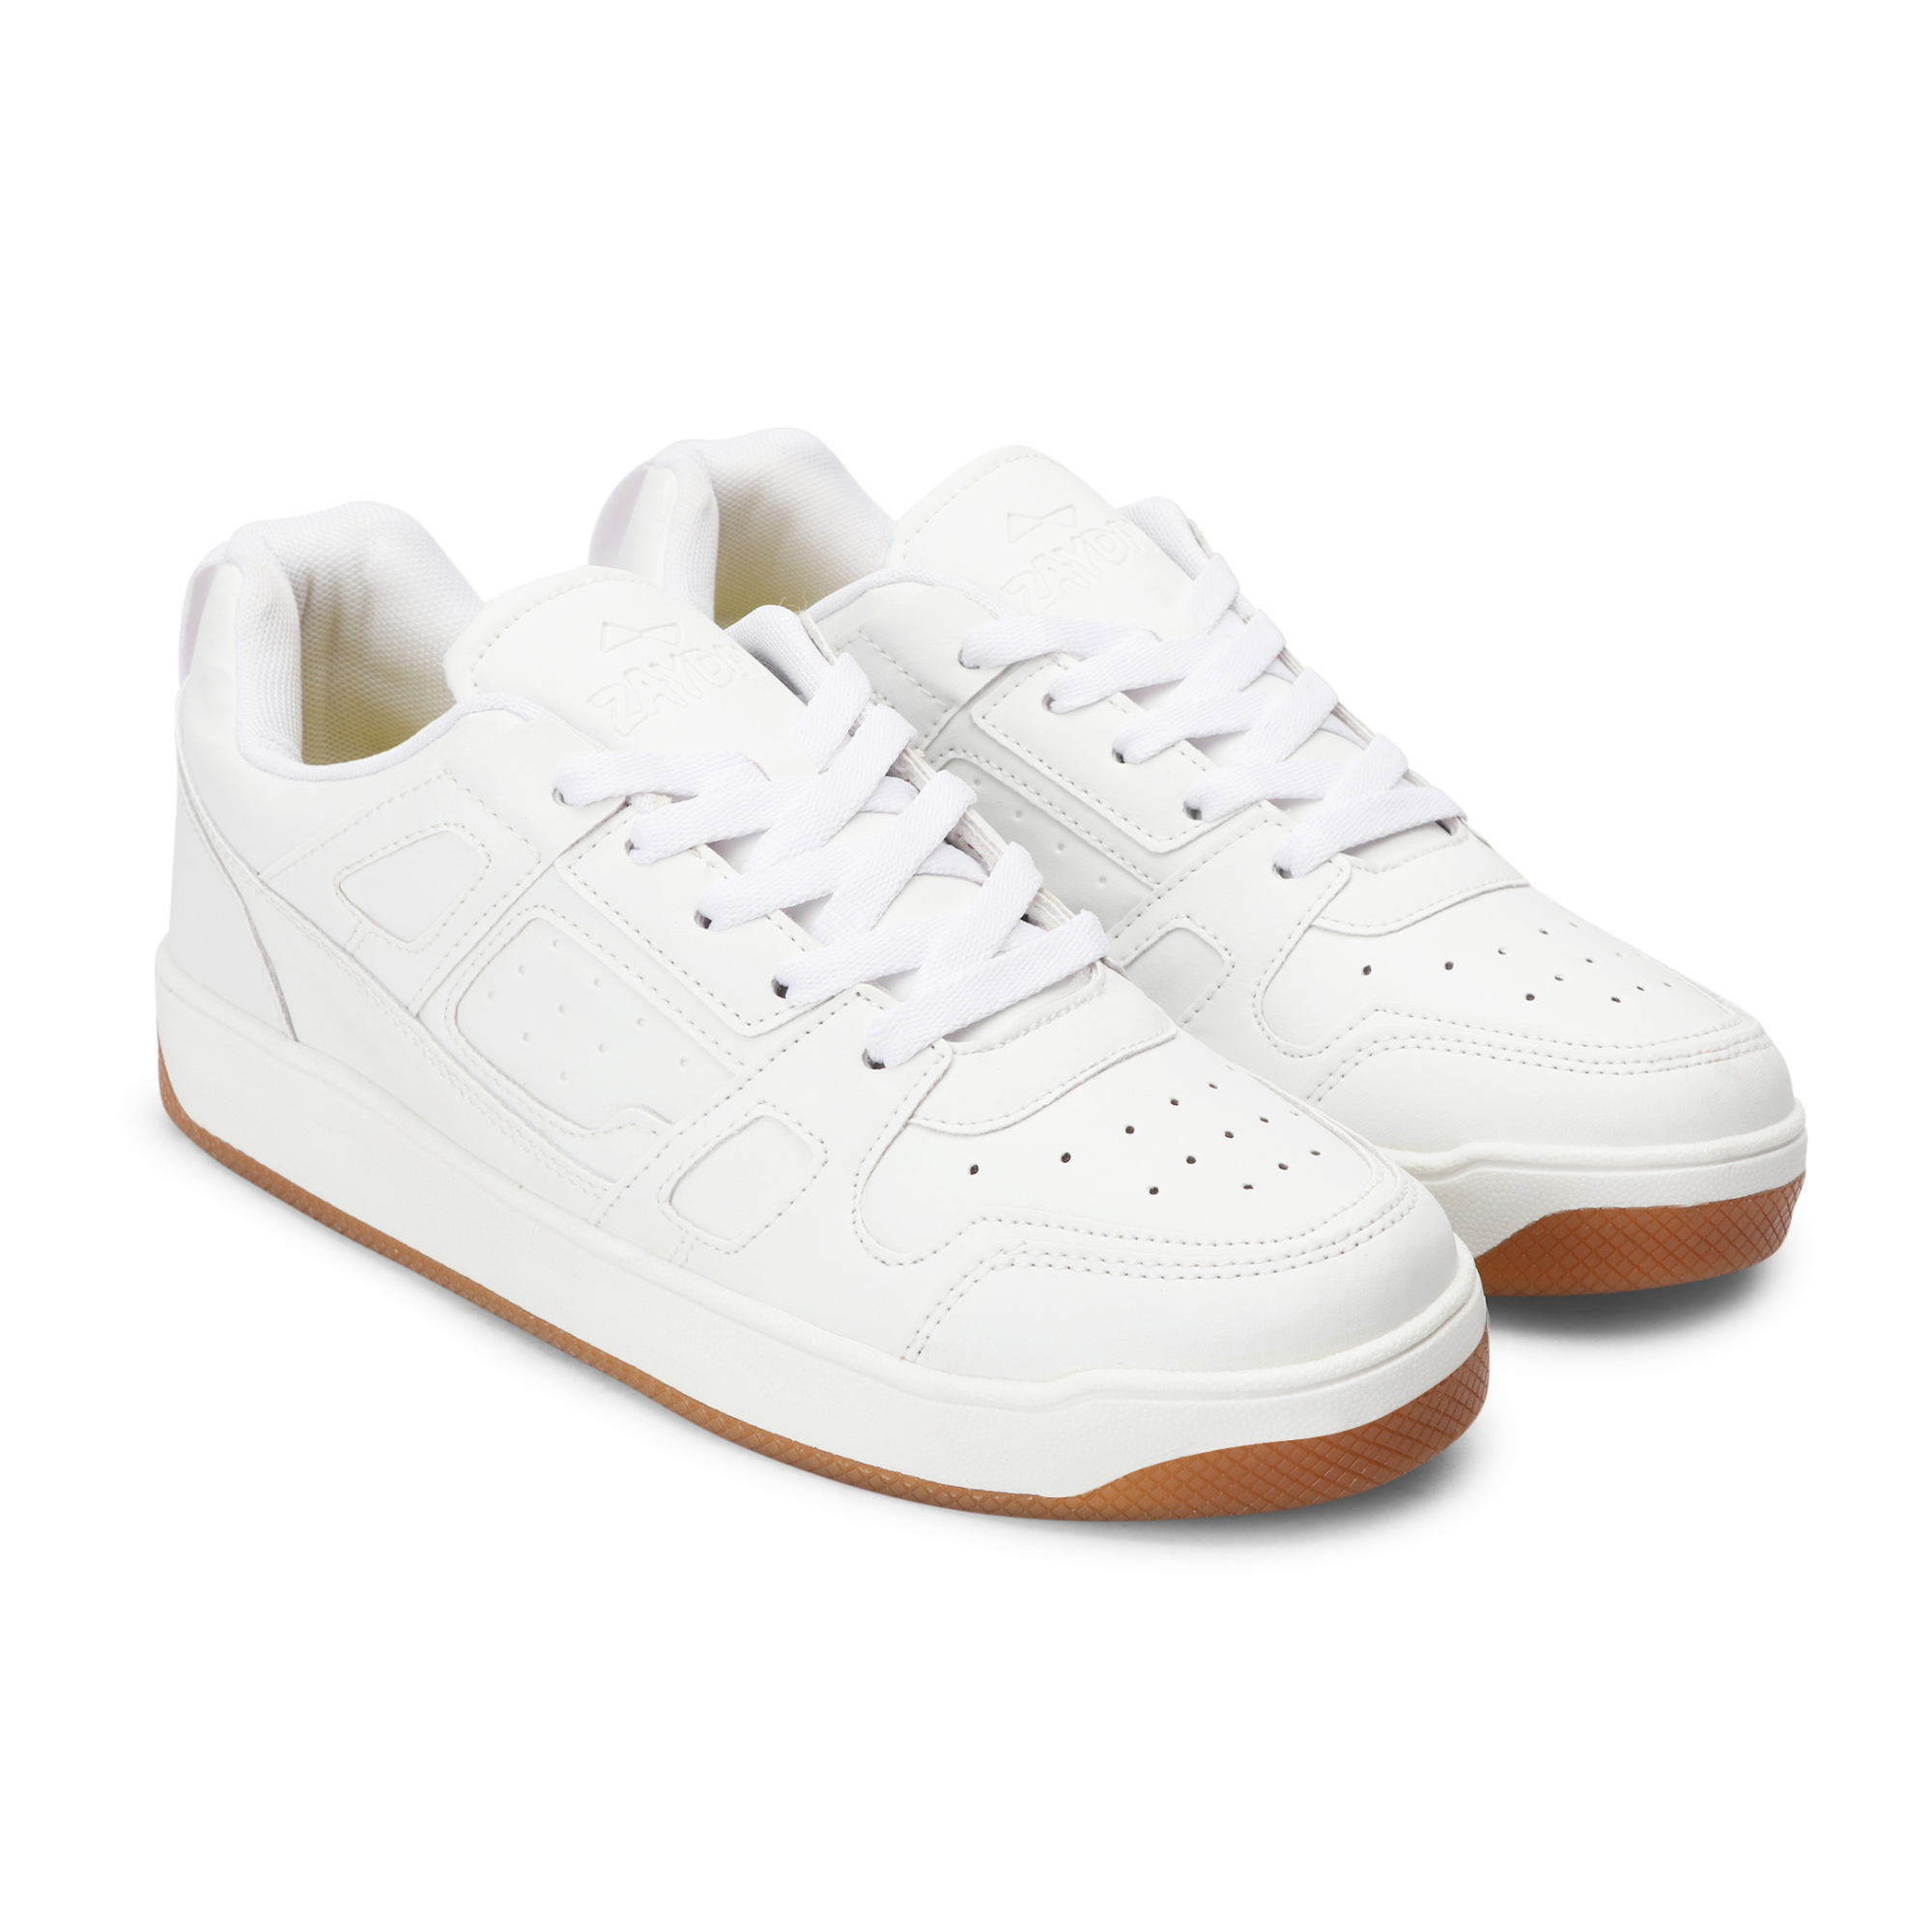 Zudio Shoes. Size- 38  White sneaker, Shoes, Clothes design